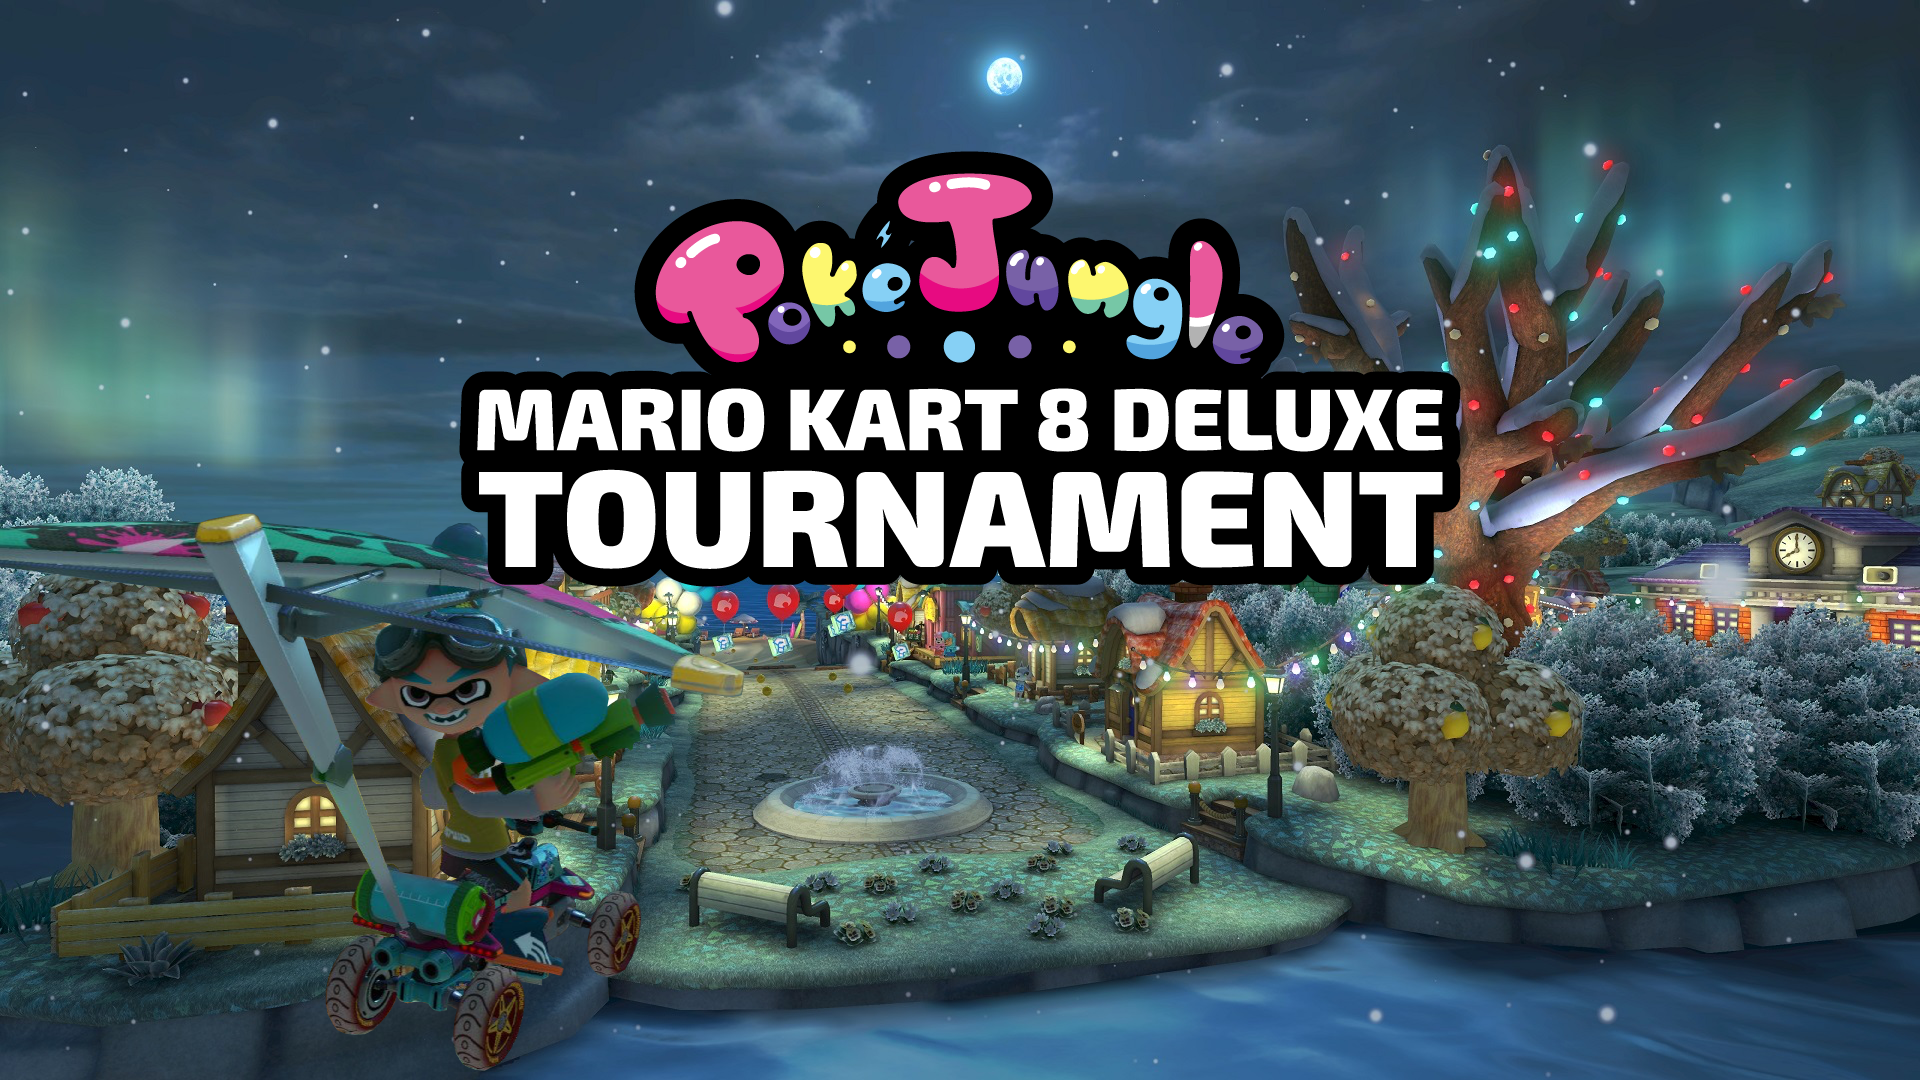 Announcing the PokéJungle Mario Kart 8 Deluxe Tournament! pokéjungle